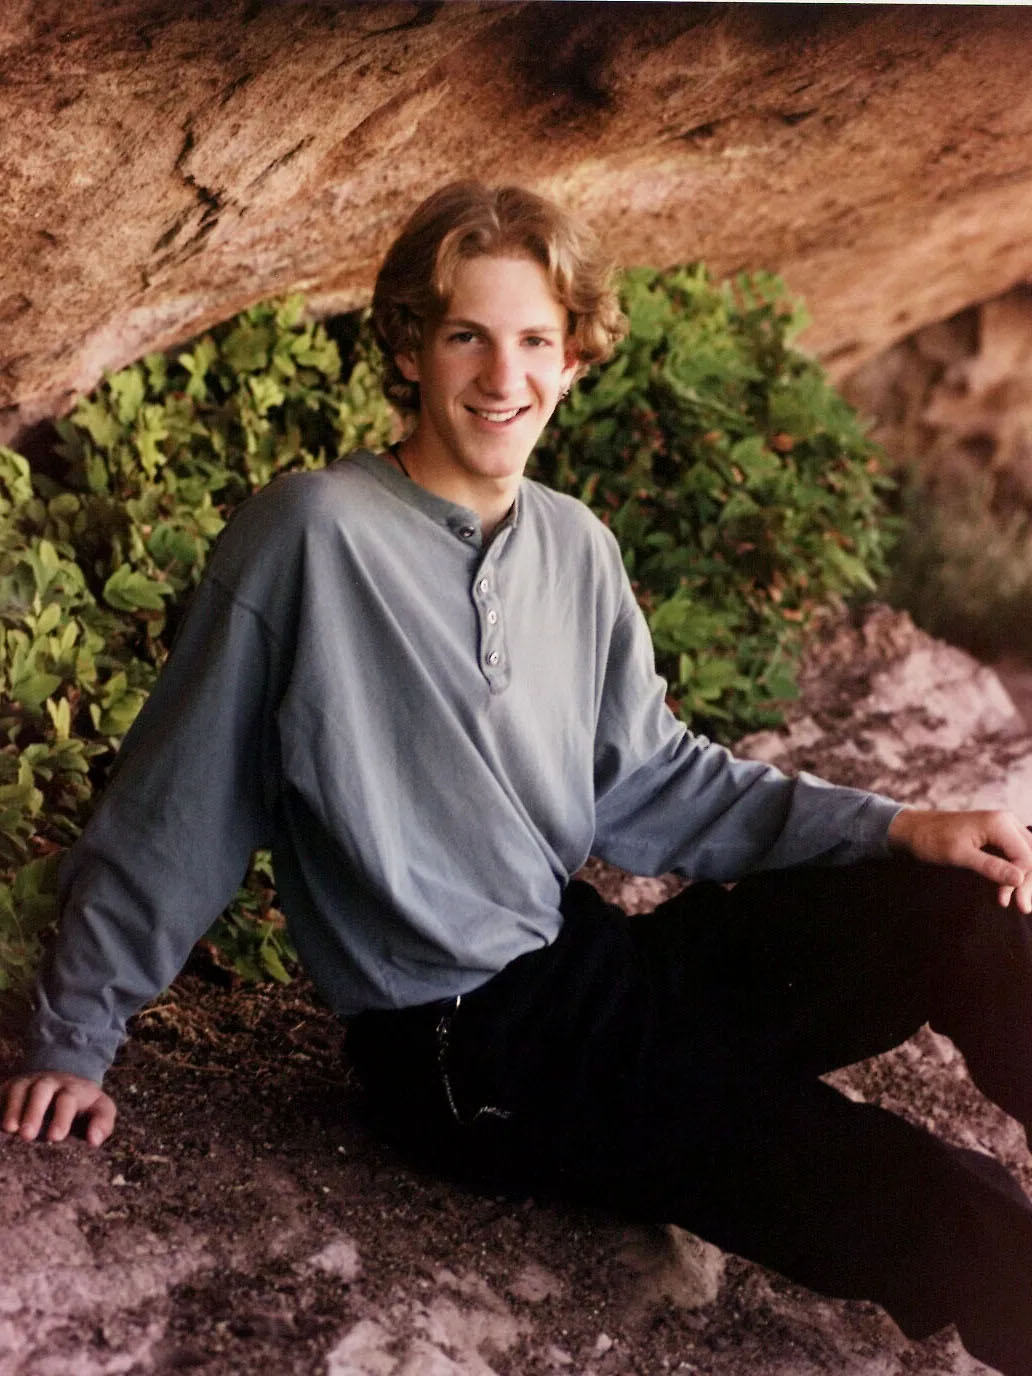 Dead bodies of Eric Harris and Dylan Klebold • GoreCenter